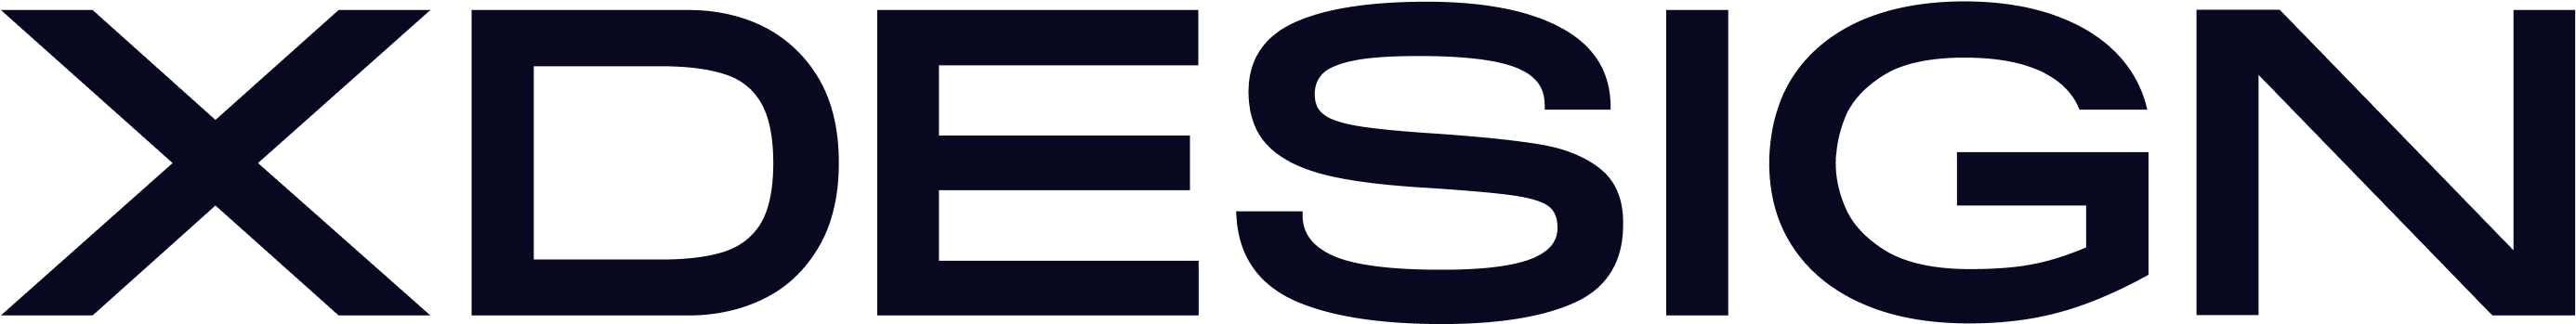 X design logo